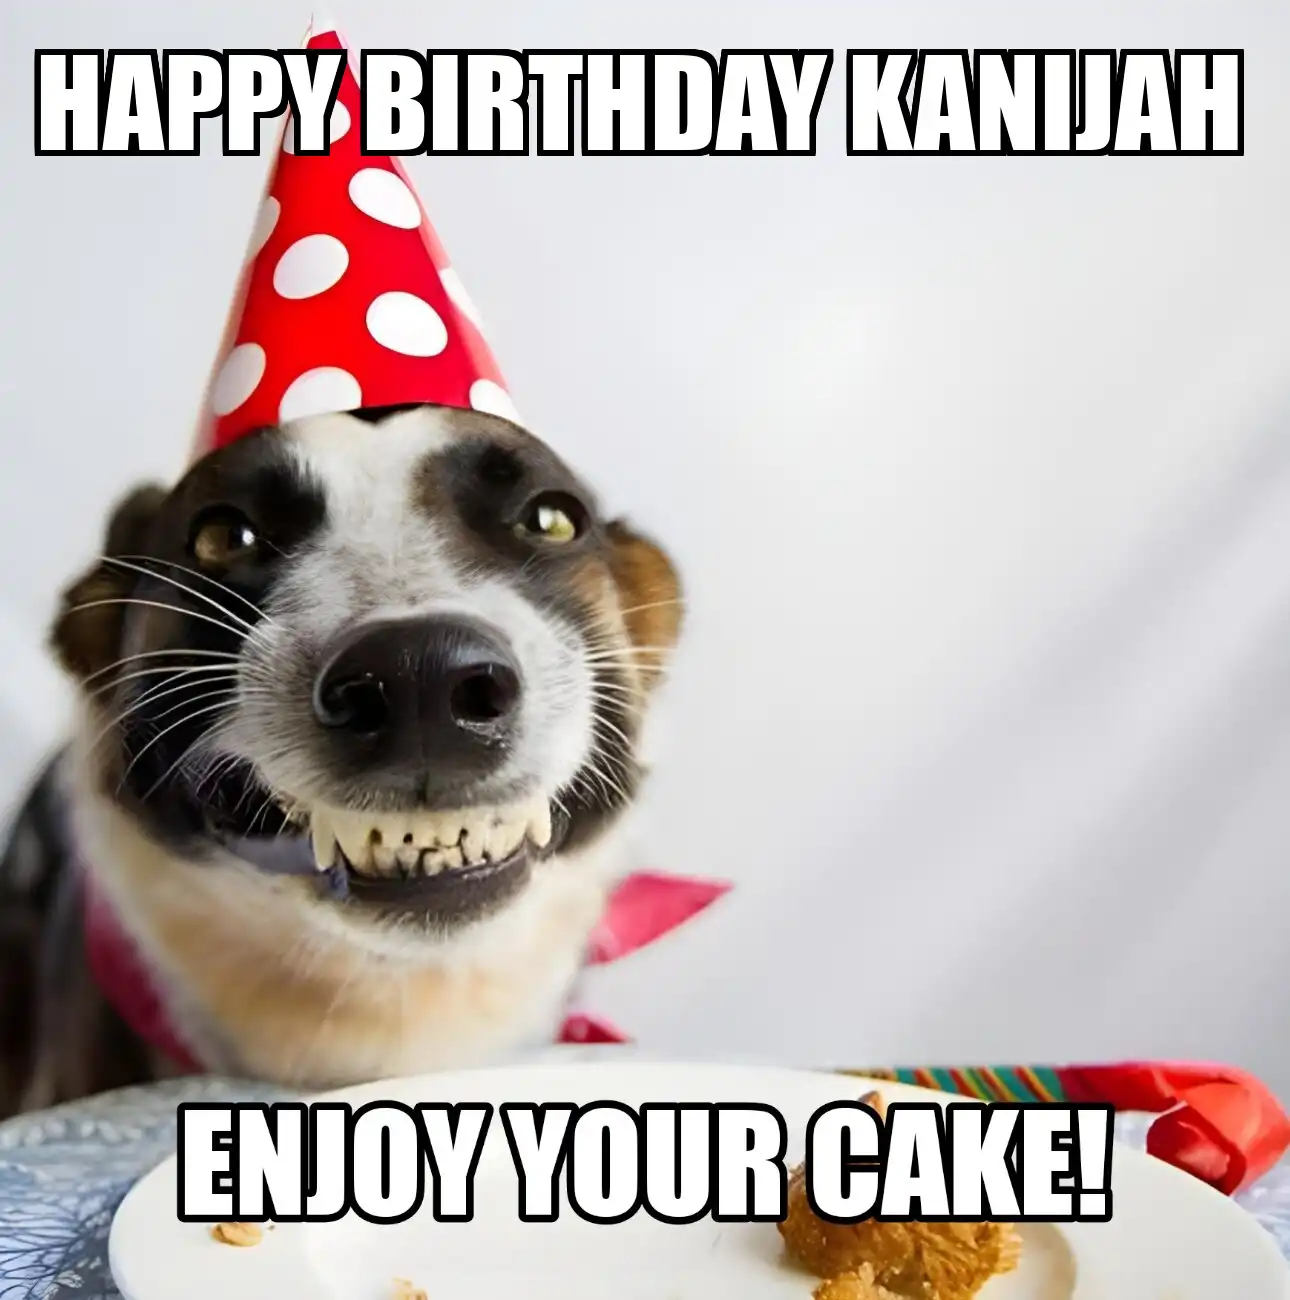 Happy Birthday Kanijah Enjoy Your Cake Dog Meme